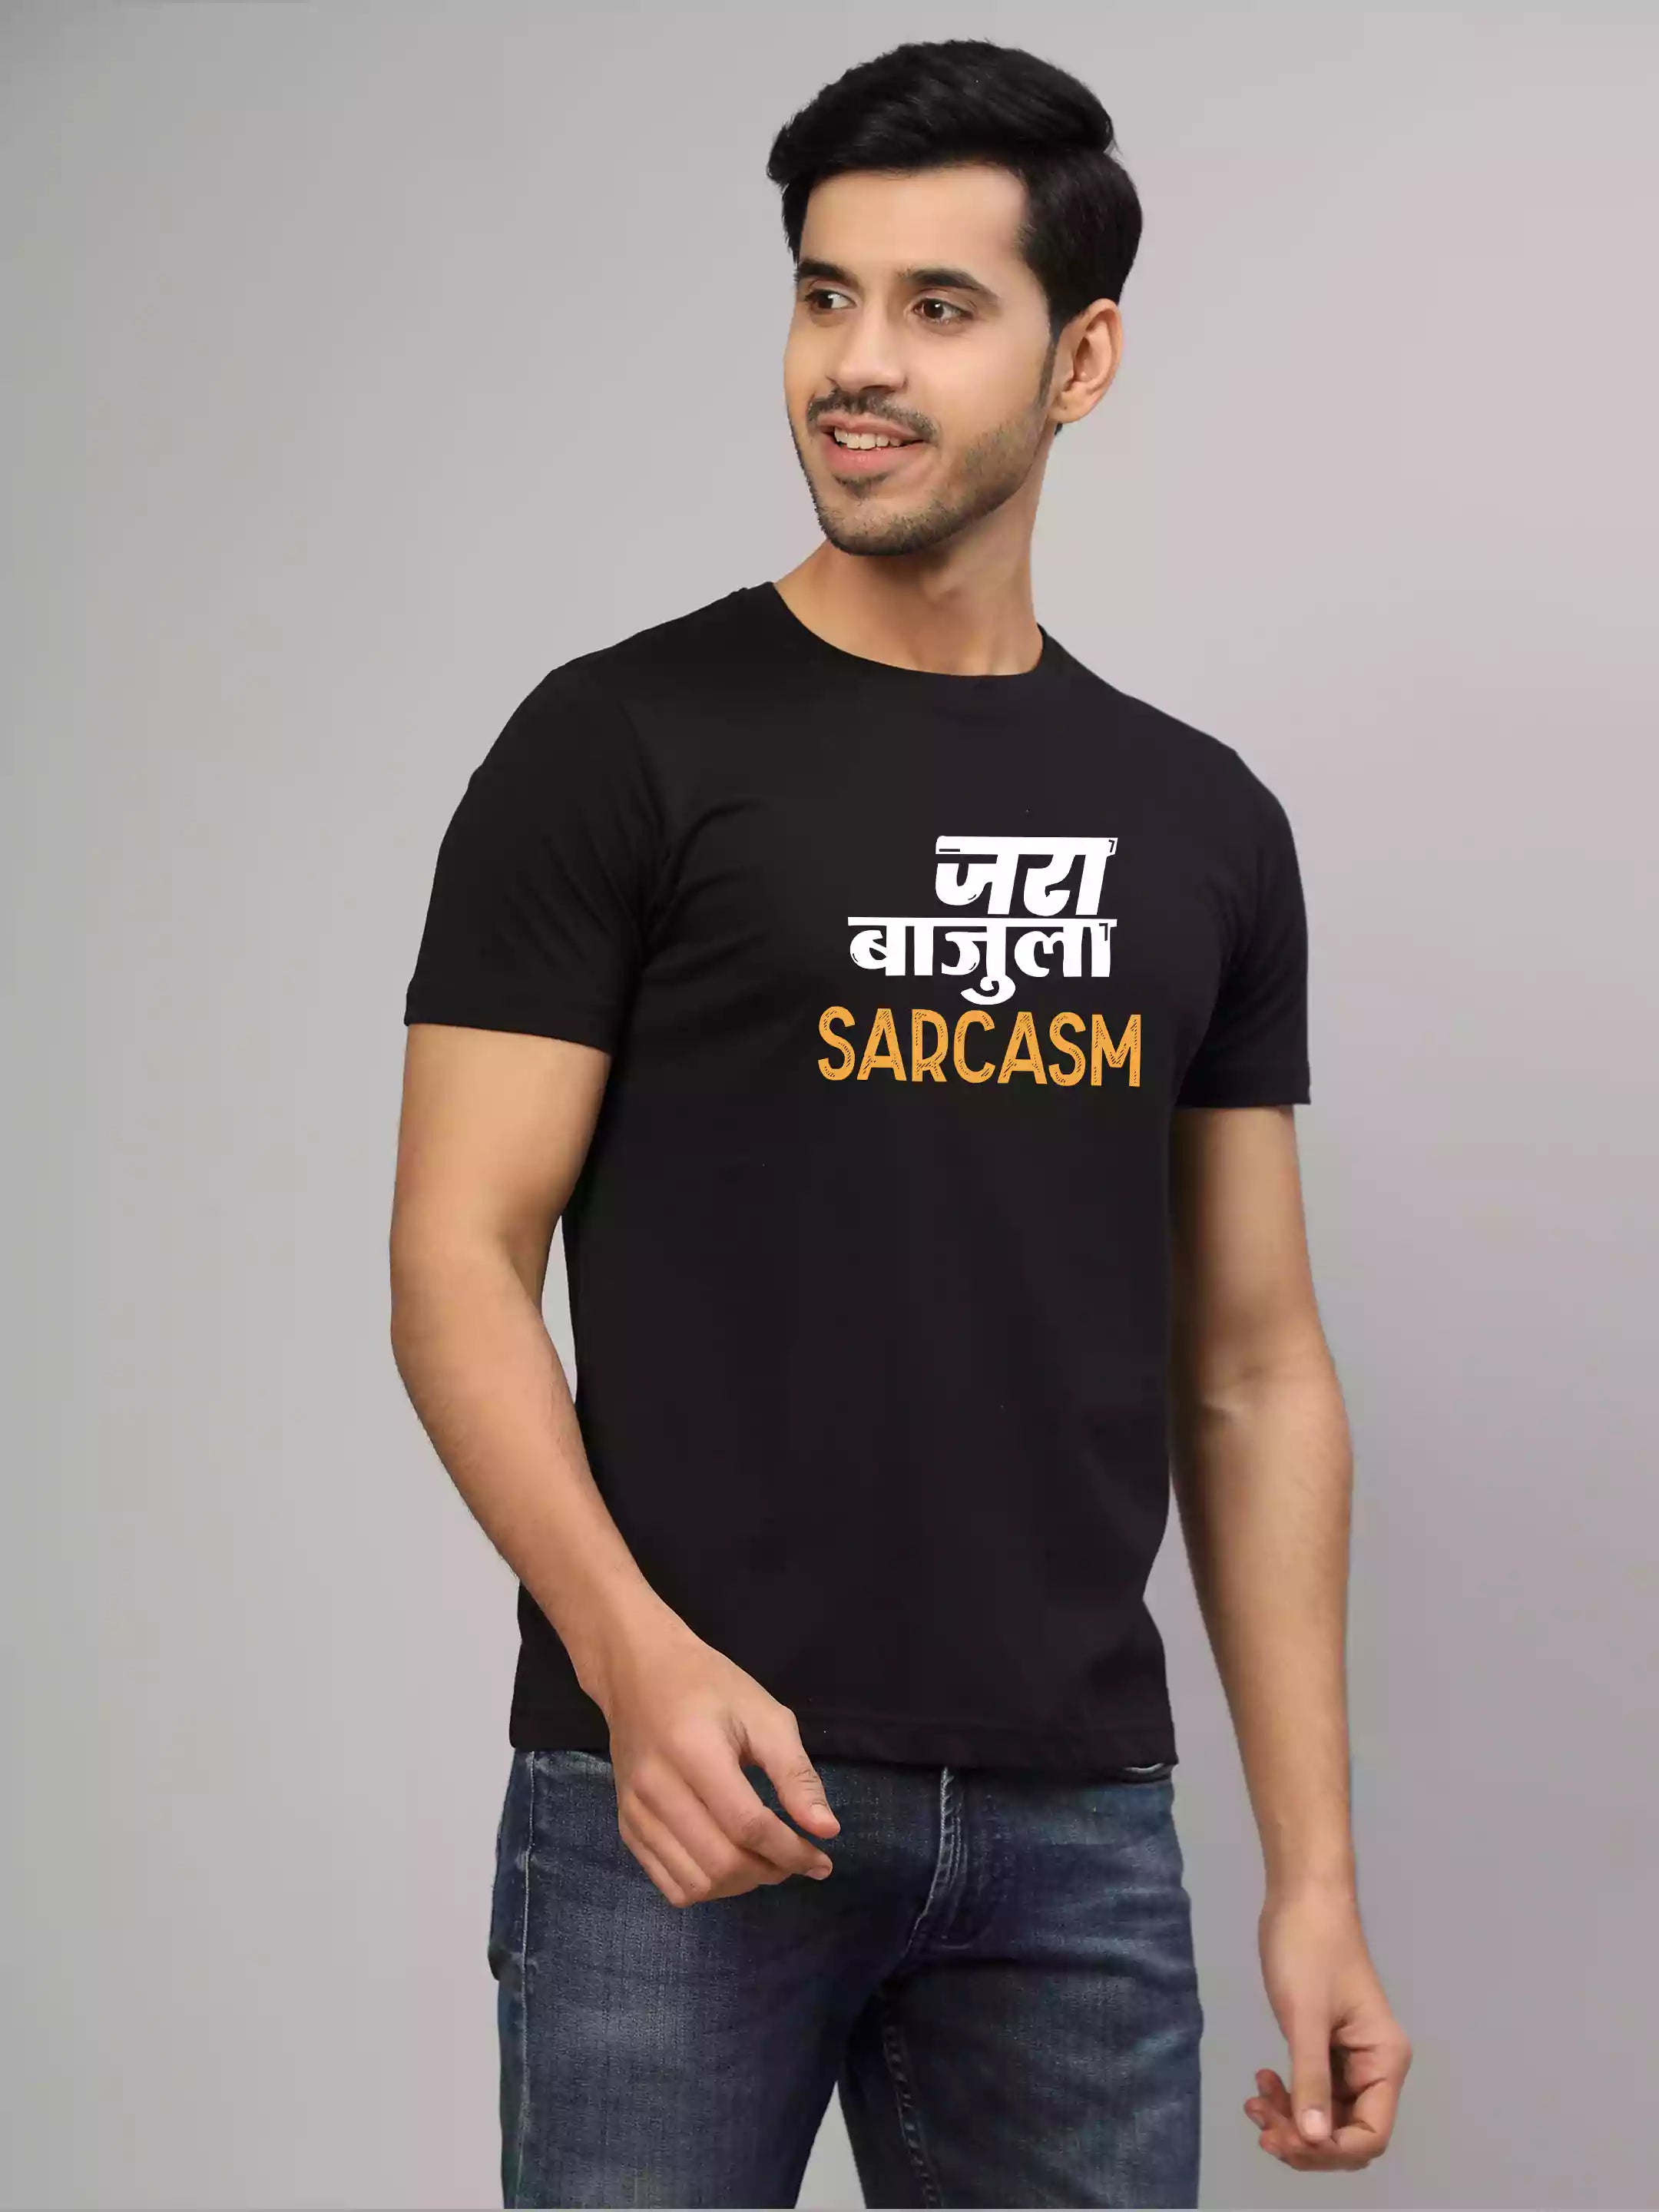 Jara bajula - Sukhiaatma Unisex Marathi Graphic Printed T-shirt